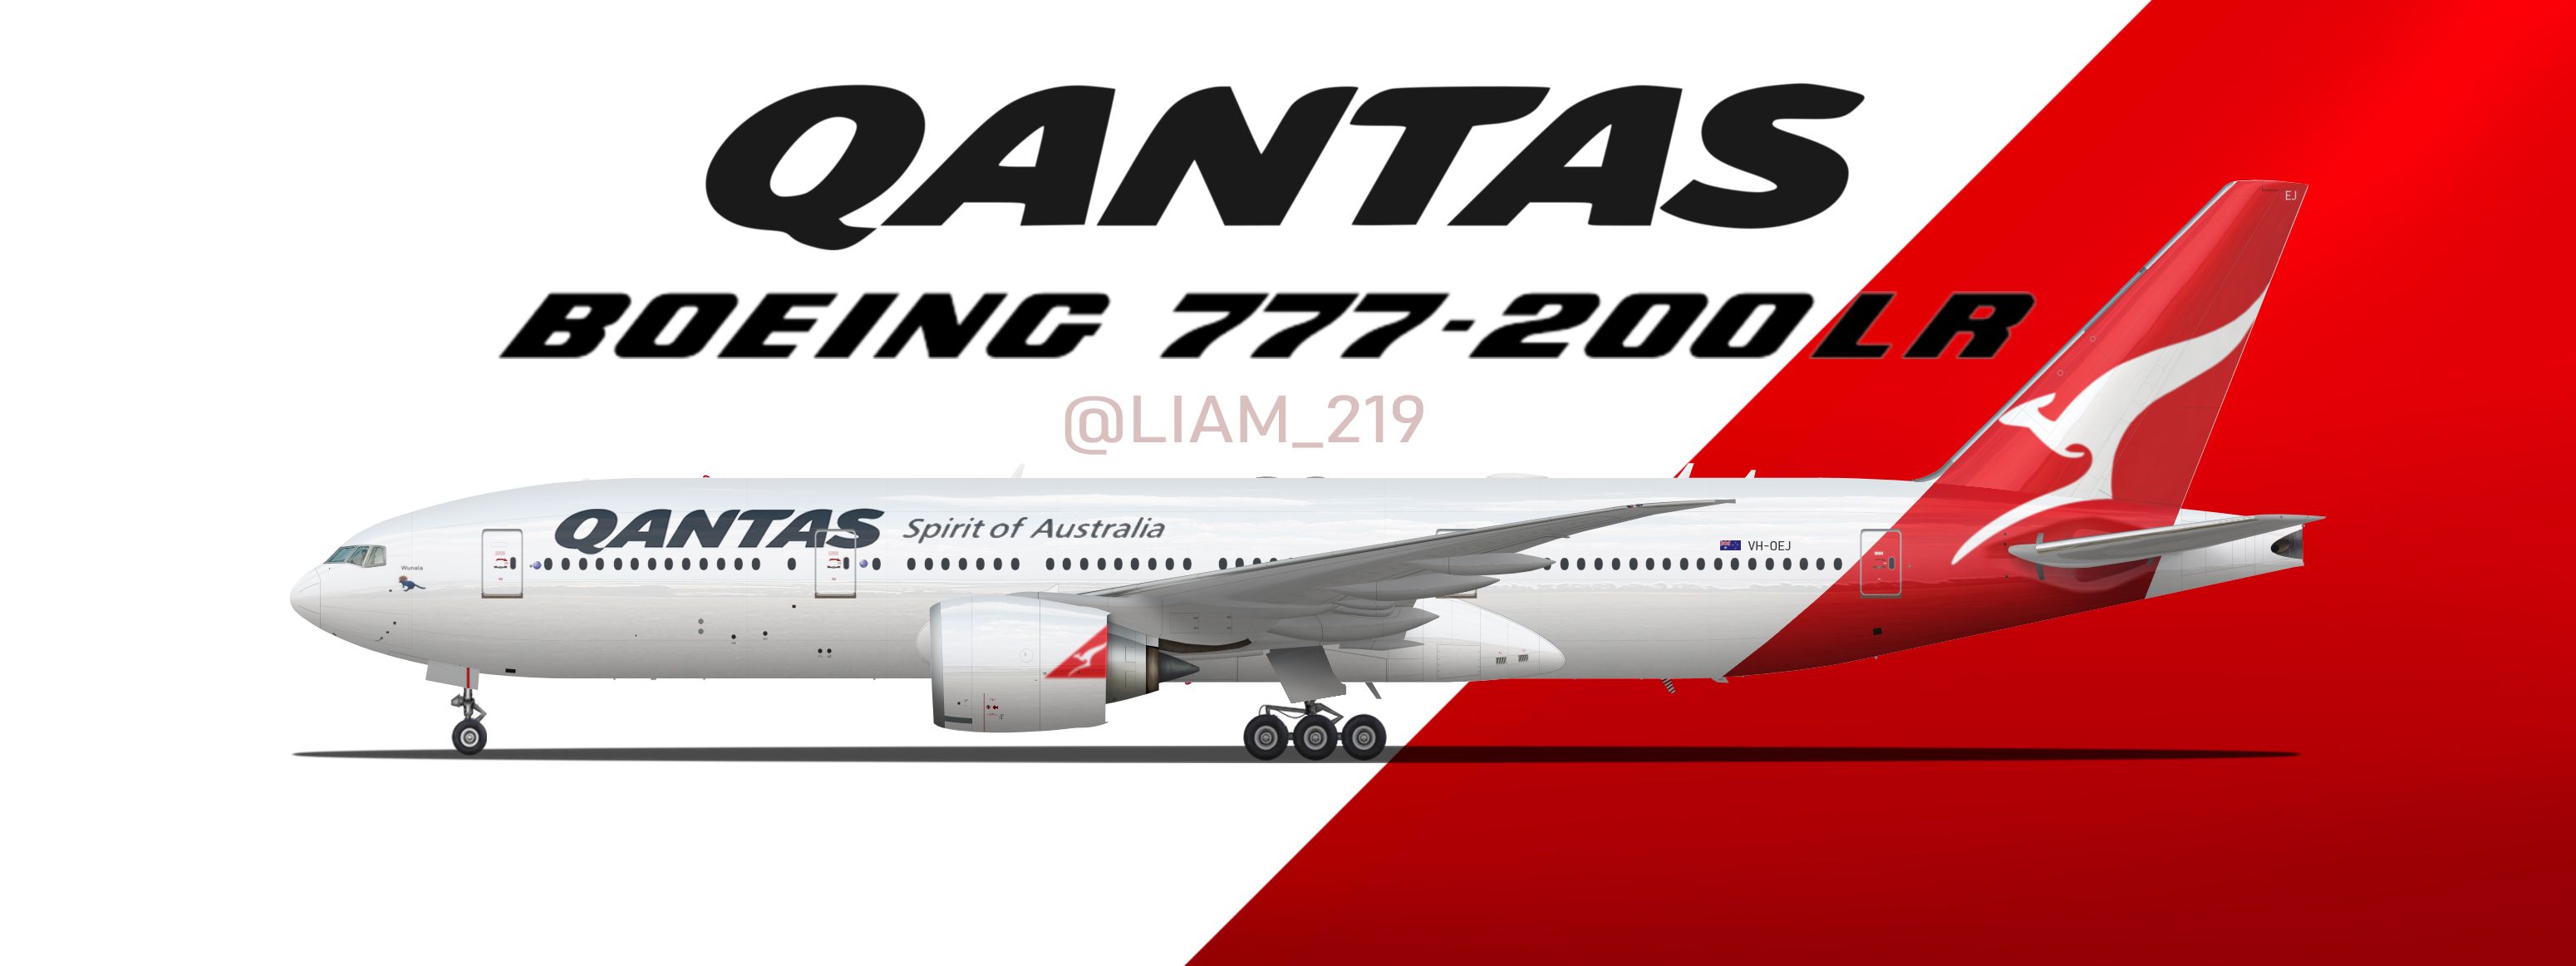 Qantas 777 200lr Concept Concepts Gallery Airline Empires